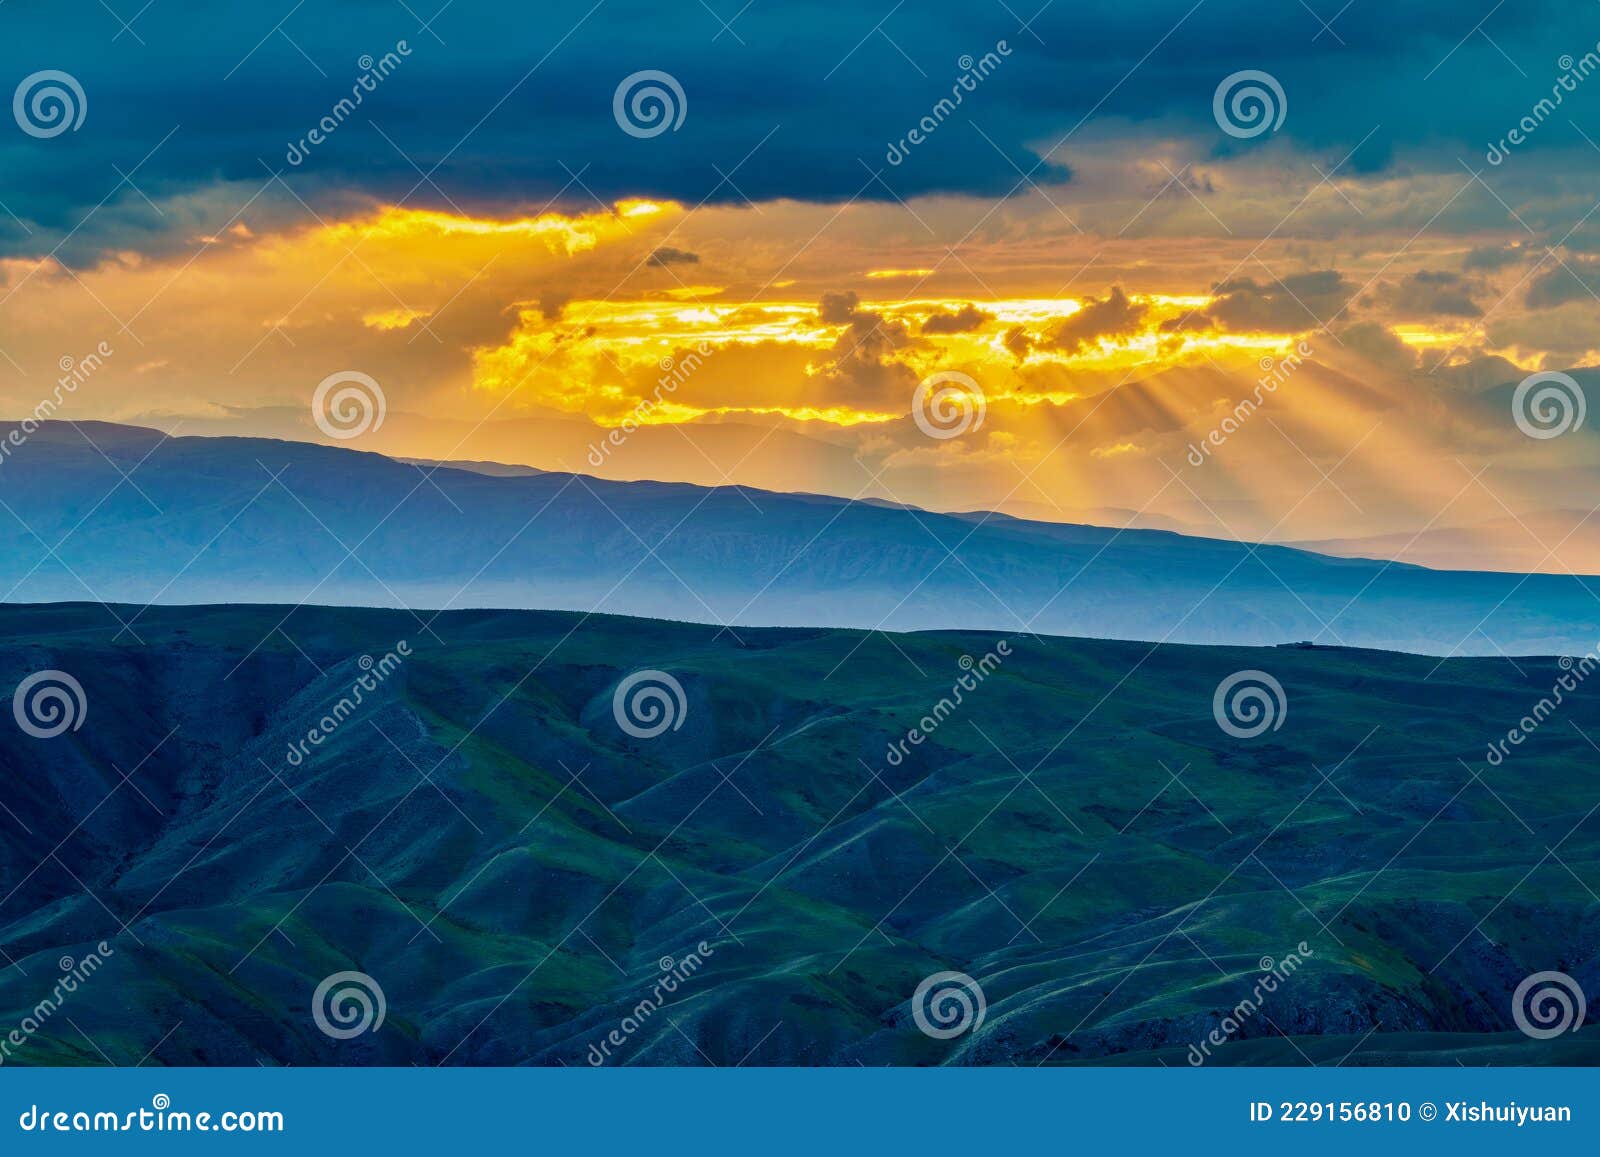 the beautiful cloudscape sunset in tekesi county